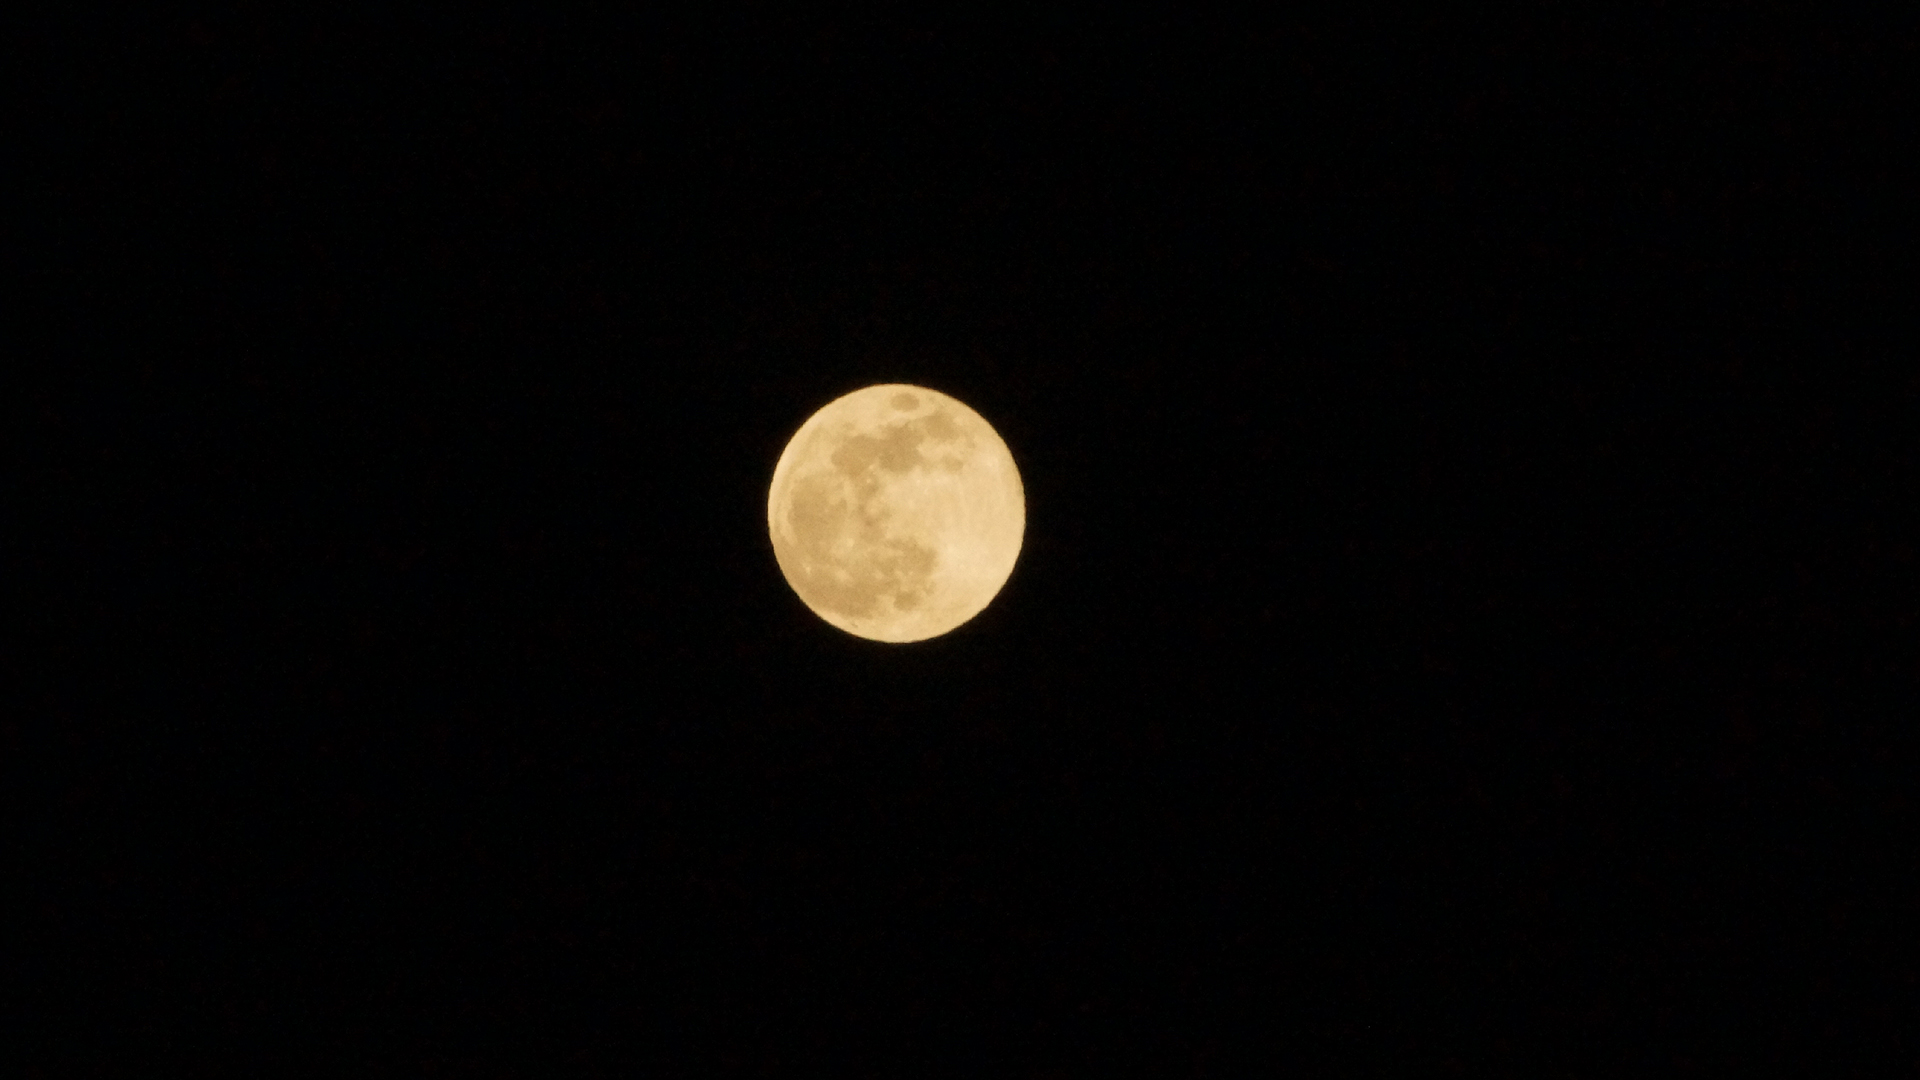 Fotostrecke Mond, Abbildung 16: Supermond vom 19. Februar 2019